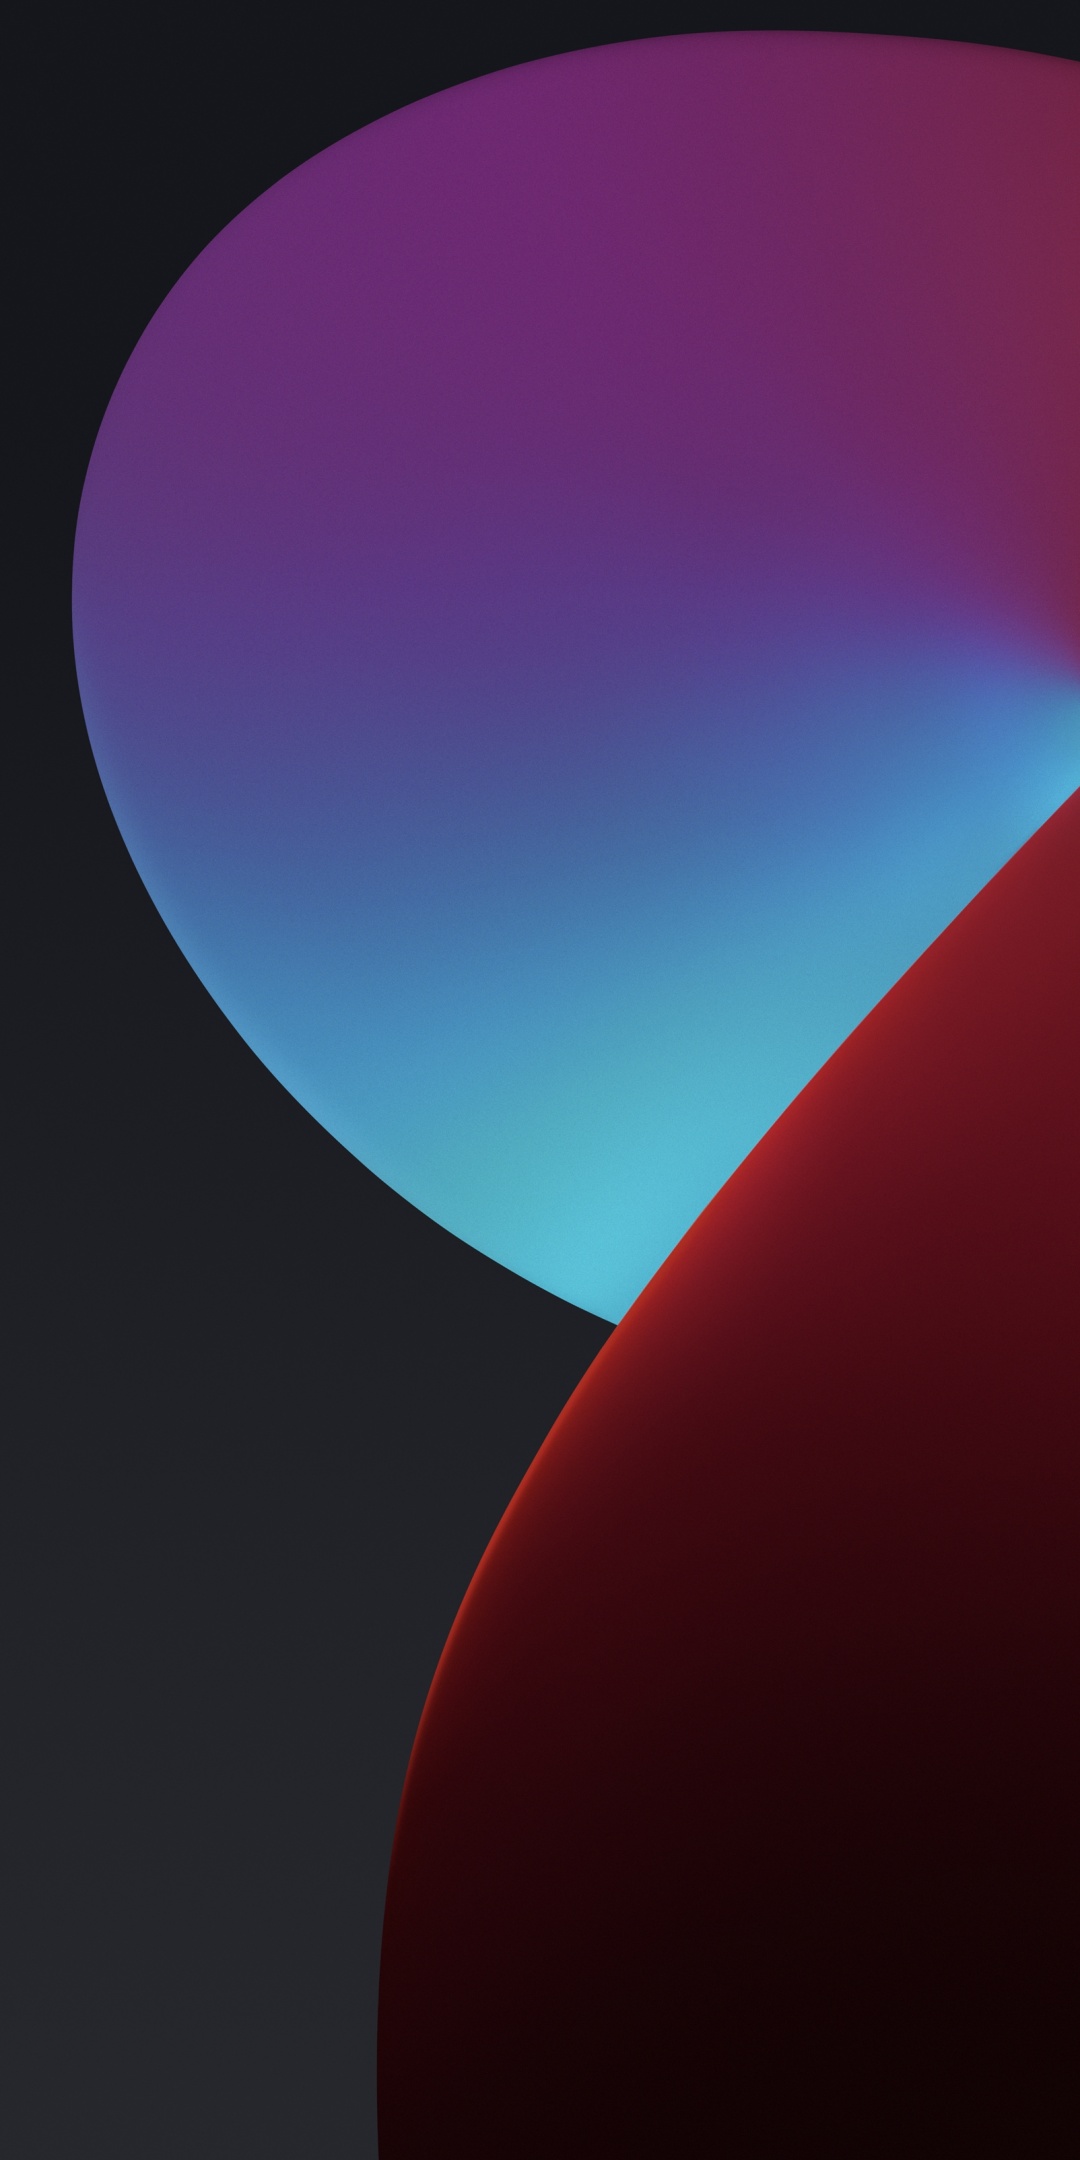 iPadOS Wallpaper 4K, Red, Dark abstract